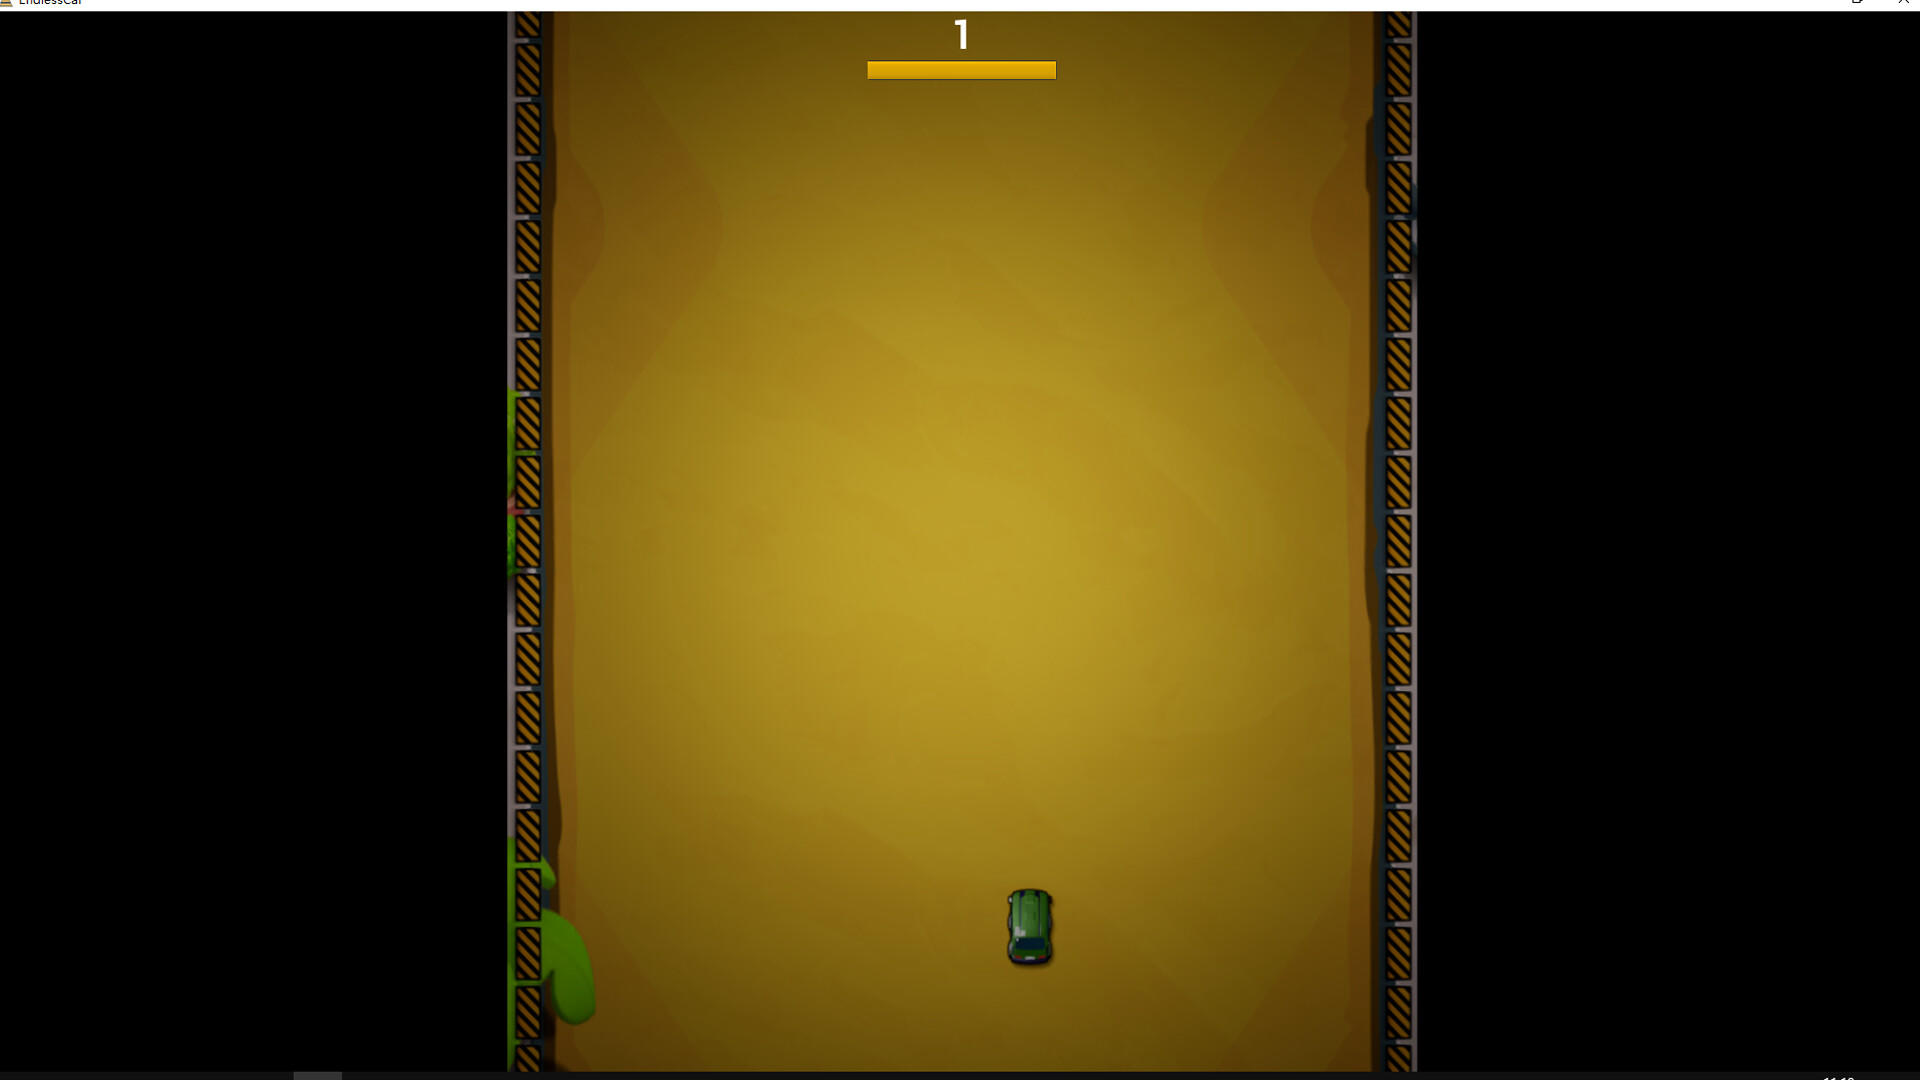 EndlessCar screenshot game